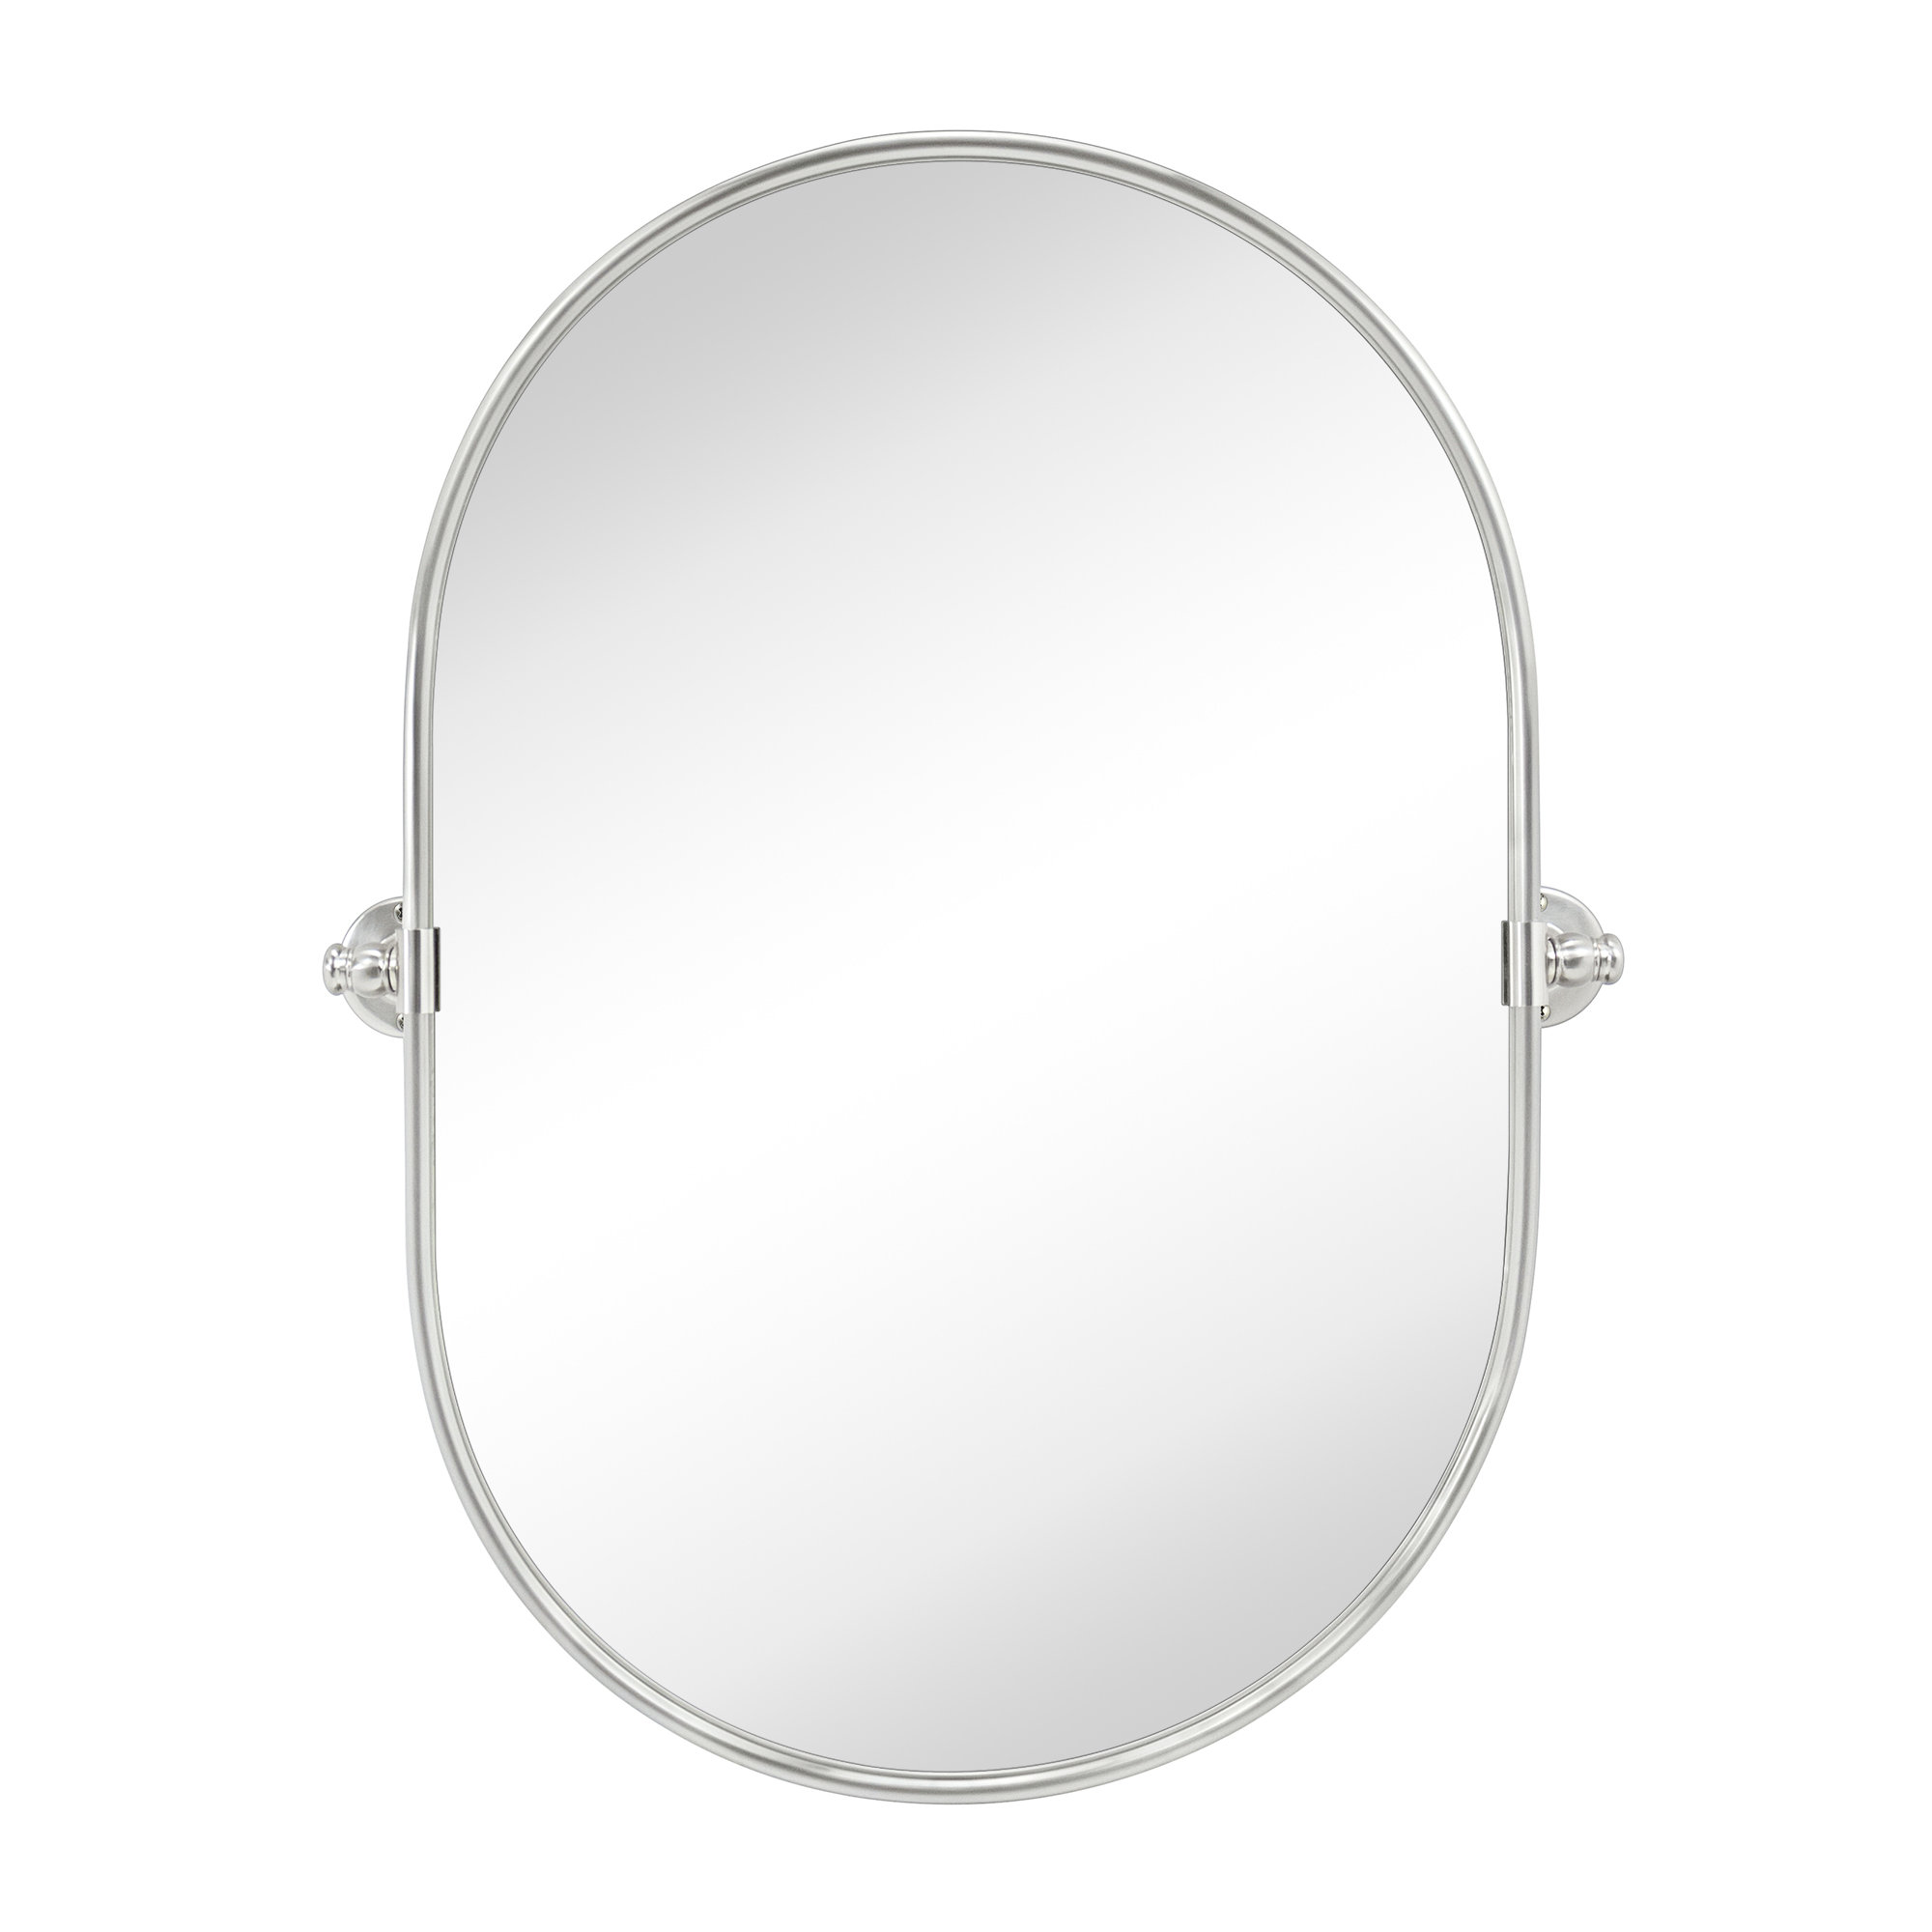 Red Barrel Studio® Oval Metal Framed Wall Mounted Bathroom Vanity Mirror  in Matt Black  Reviews Wayfair